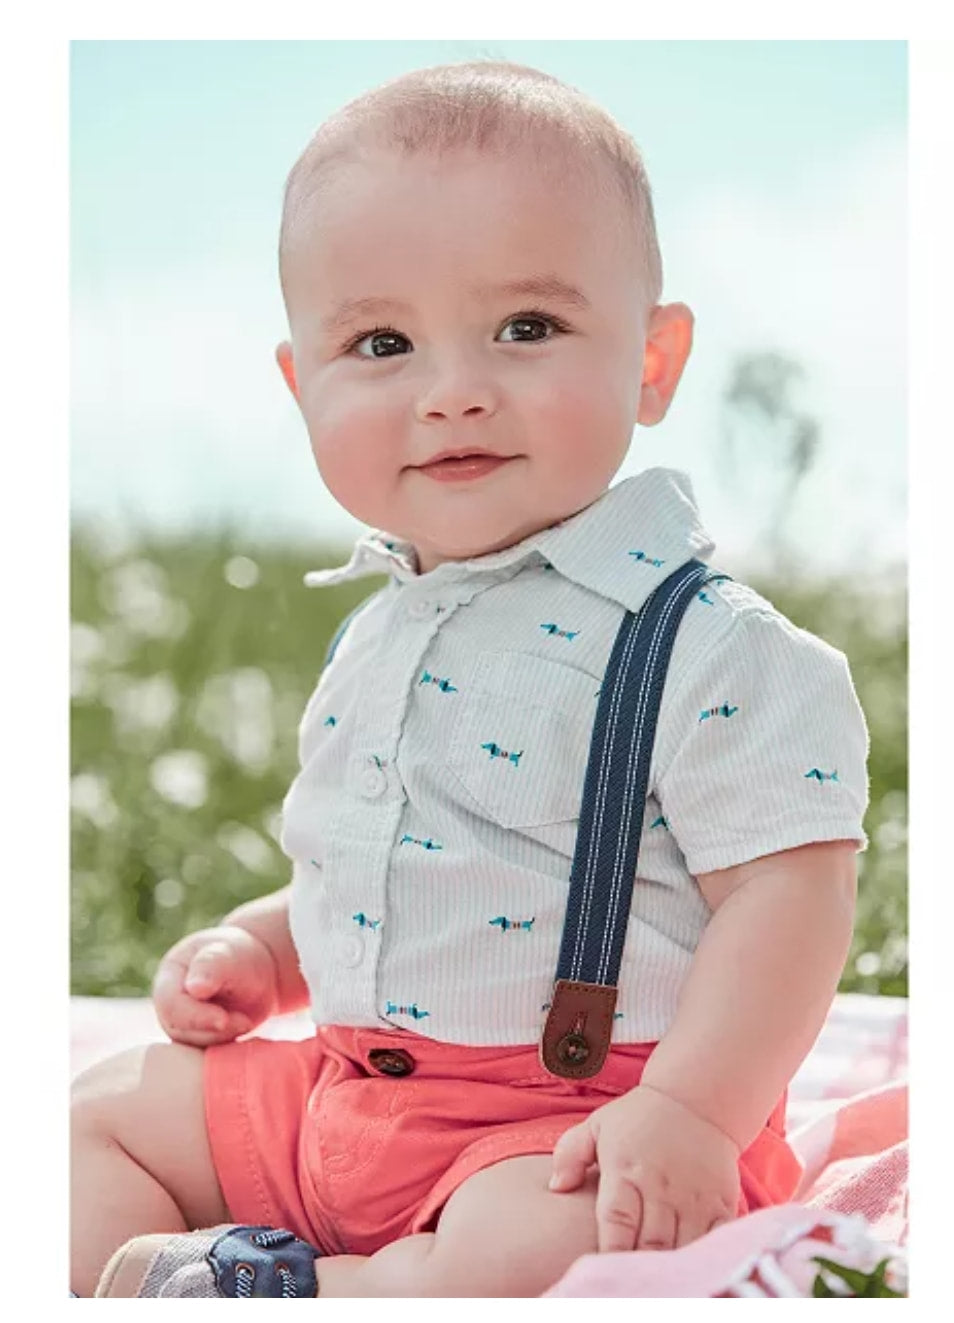 Carter's Toddler Boys 3-Pc. Dog-Print Shirt, Solid Shorts & Suspenders Set